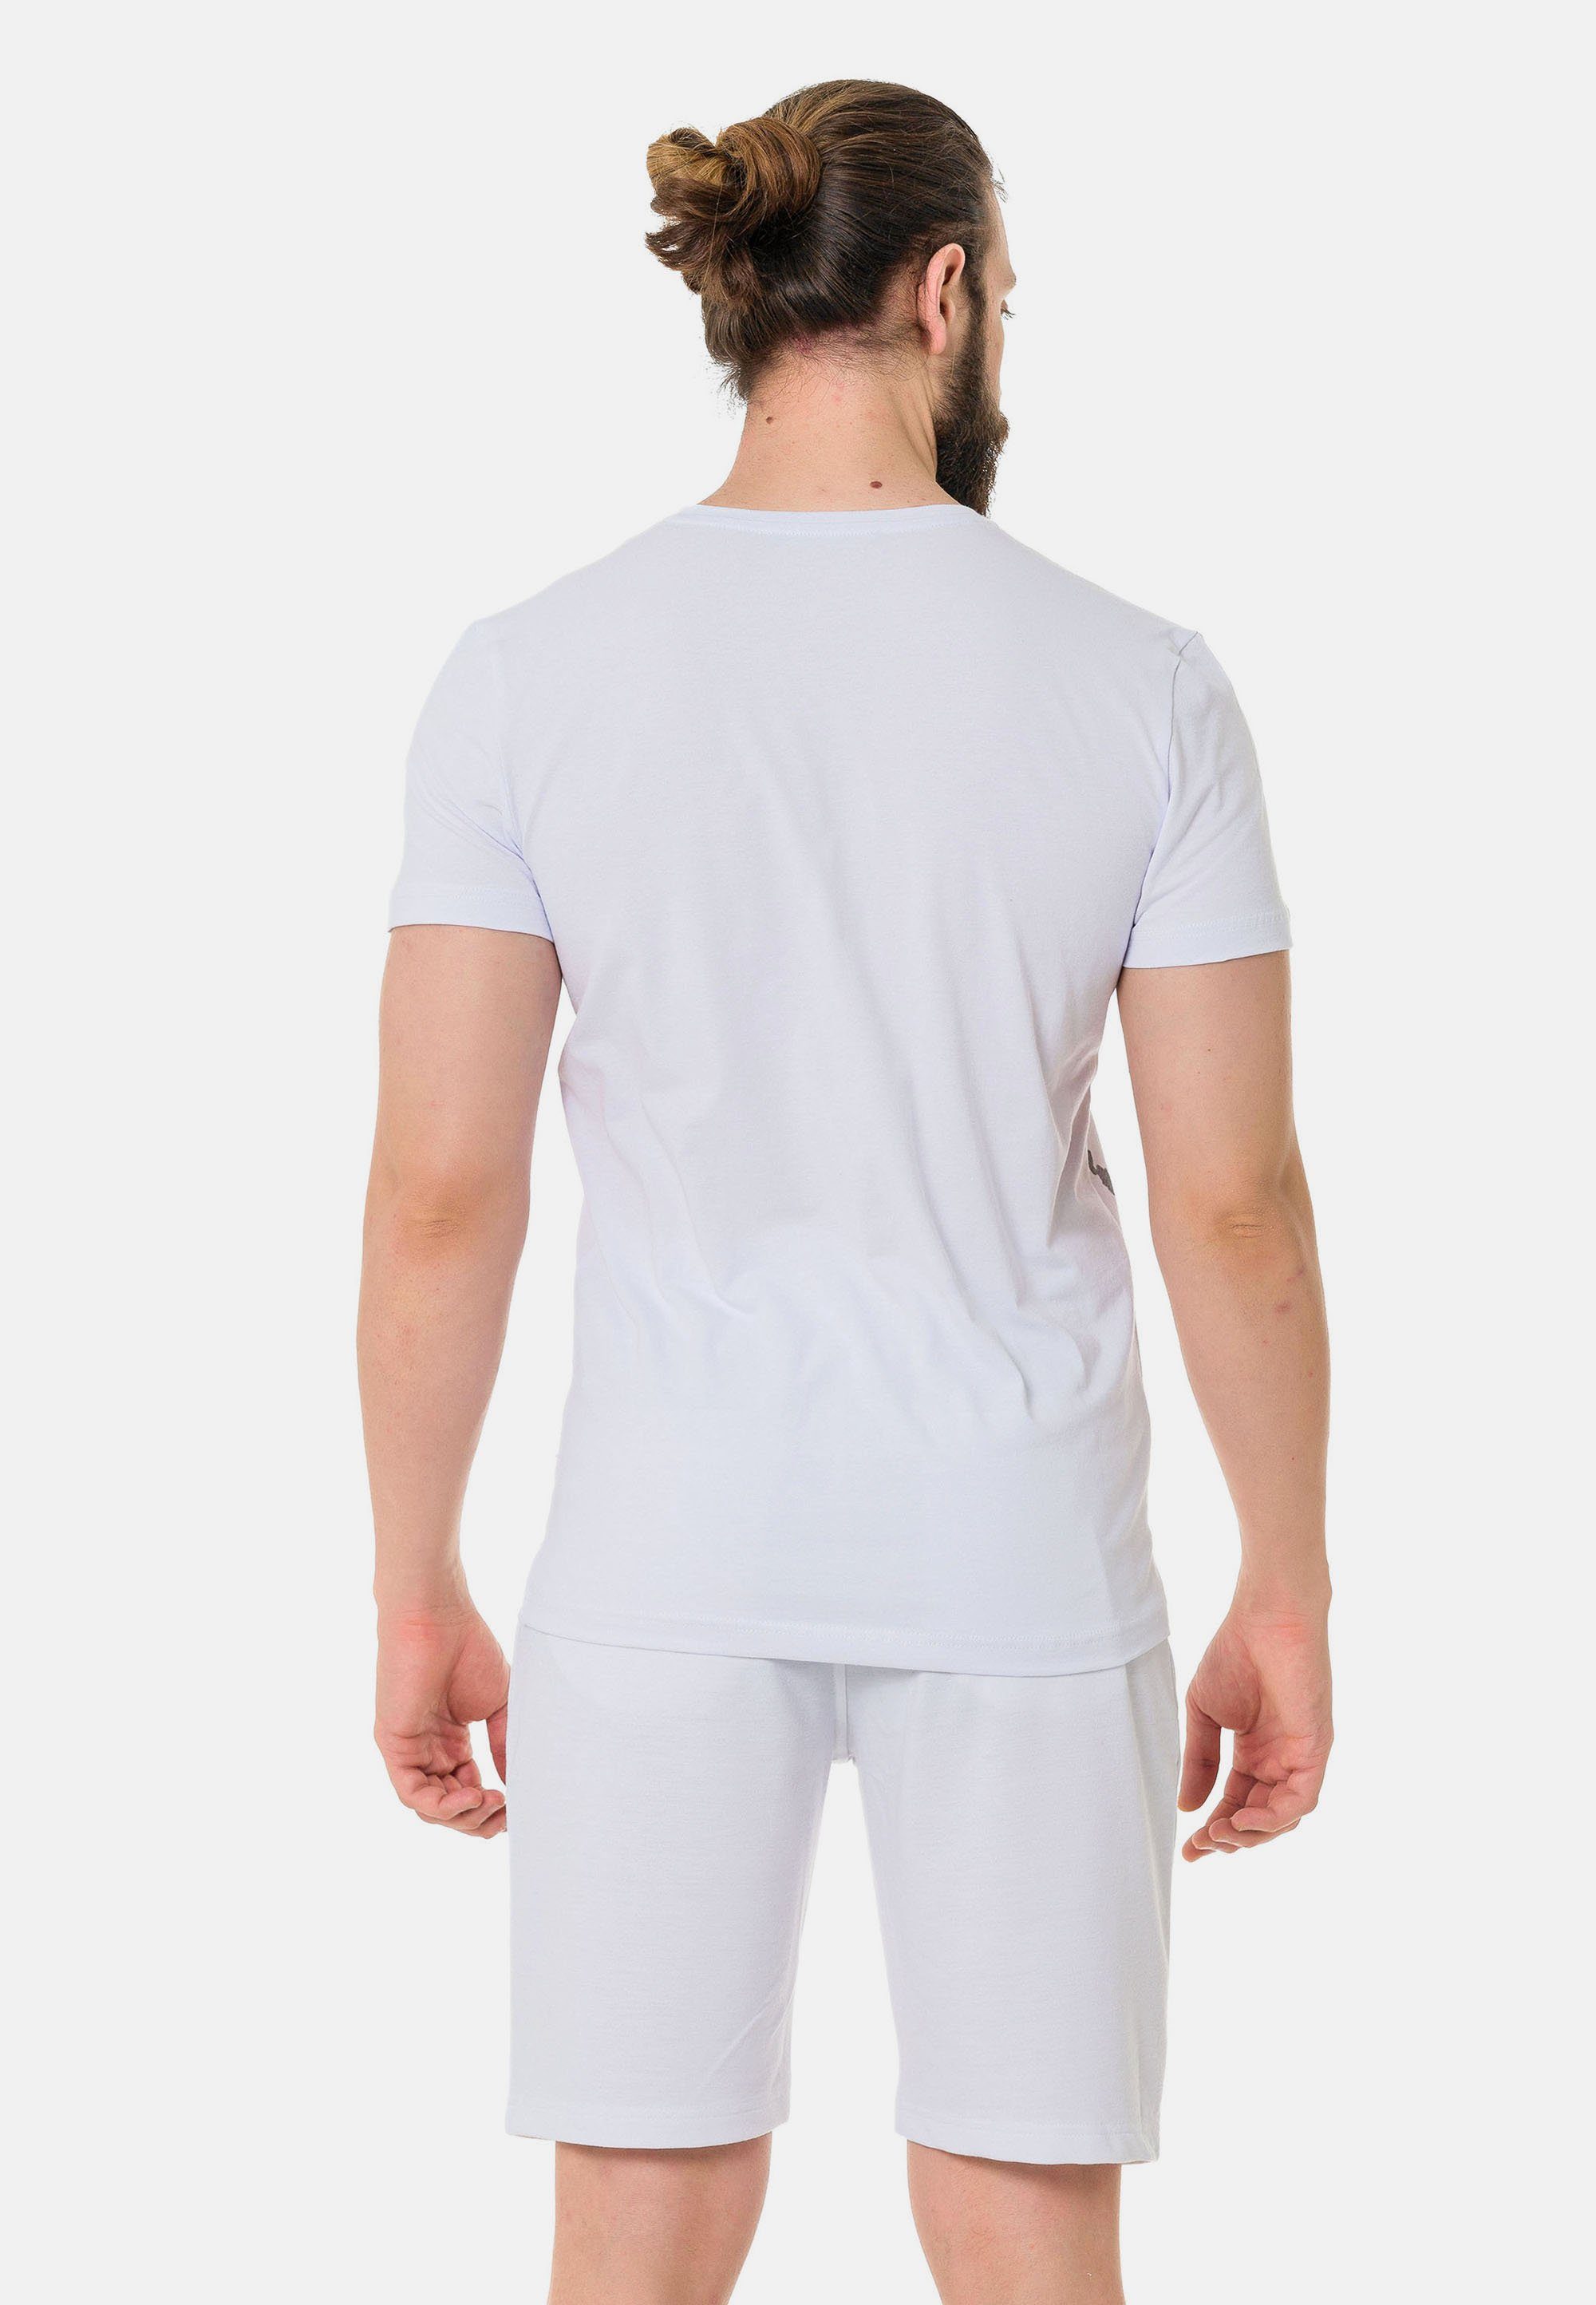 coolem T-Shirt & mit Cipo weiß Baxx Markenprint